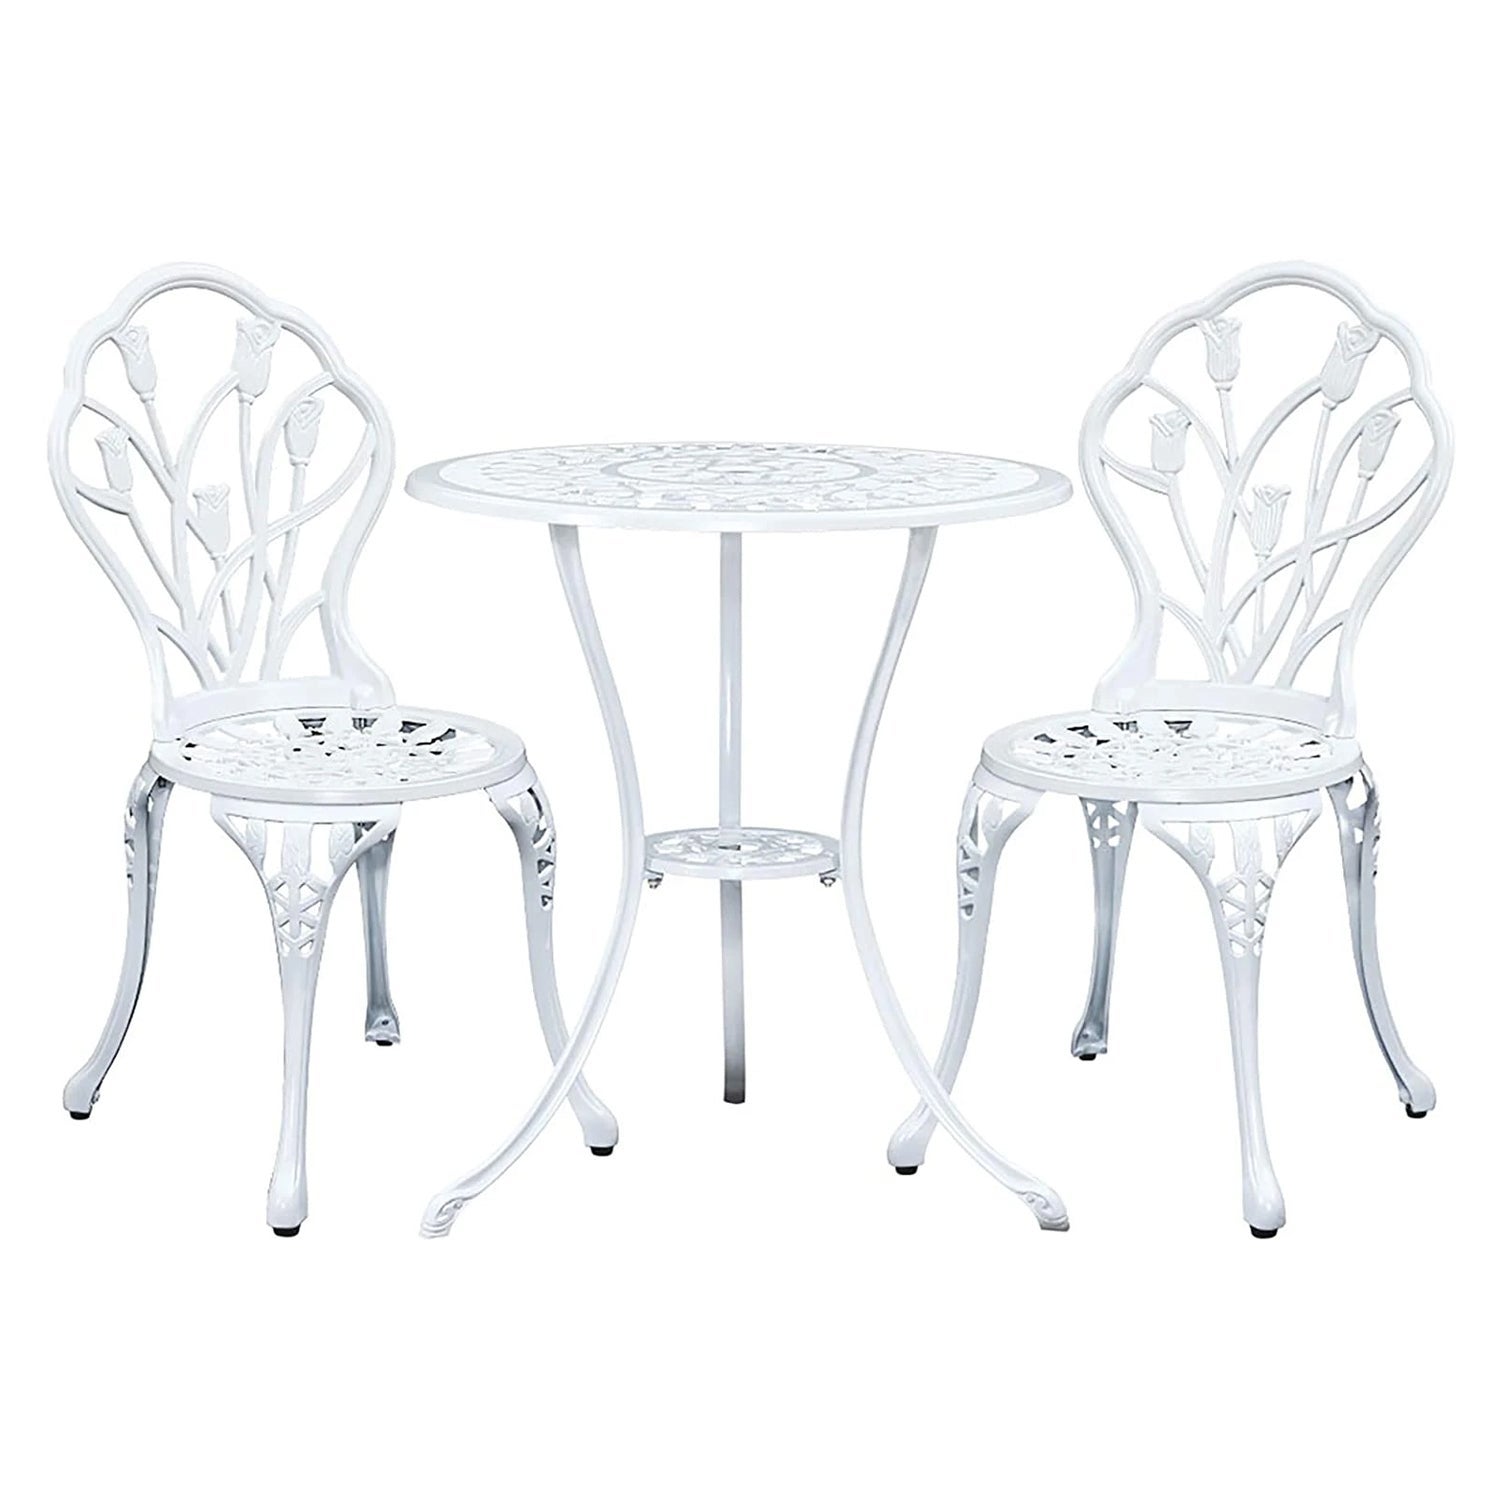 Outdoor Setting Cast Aluminium Bistro Table Chairs Garden Patio - White 3pc